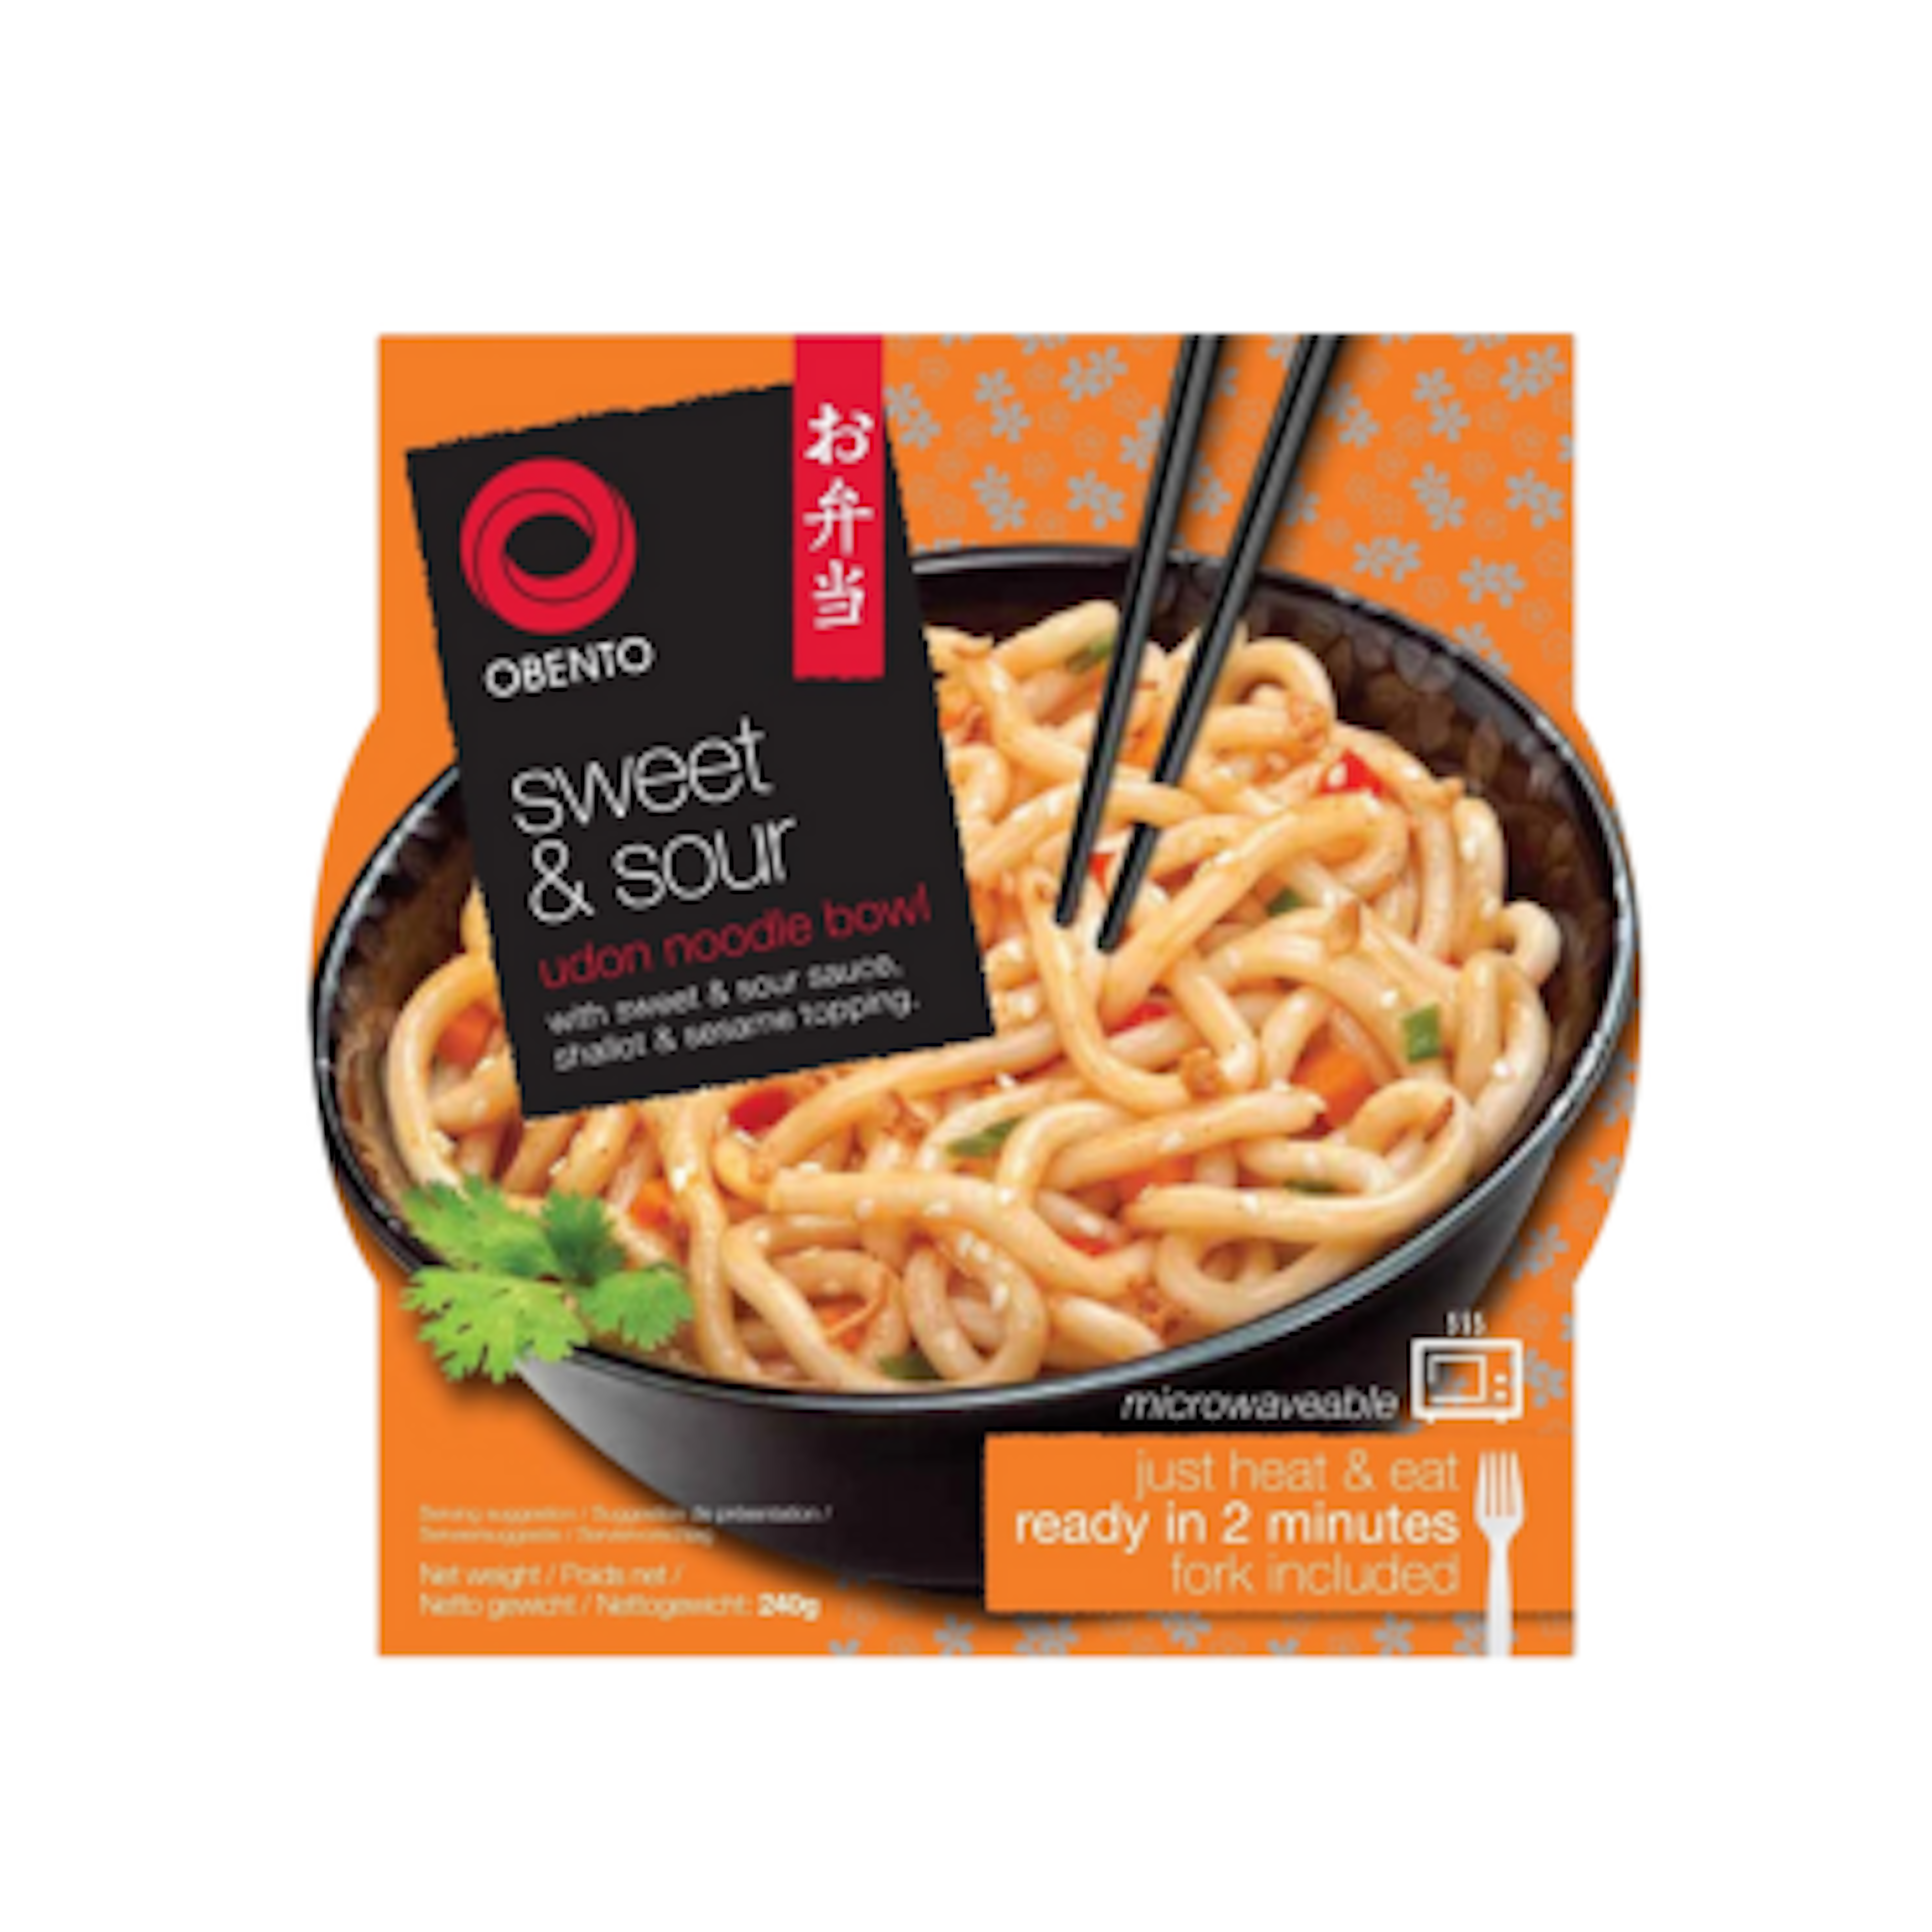 Obento Sweet & Sour Udon Noodle Bowl - Süß-saure Udon-Nudeln mit Schallotten- und Sesam-Topping, 240g